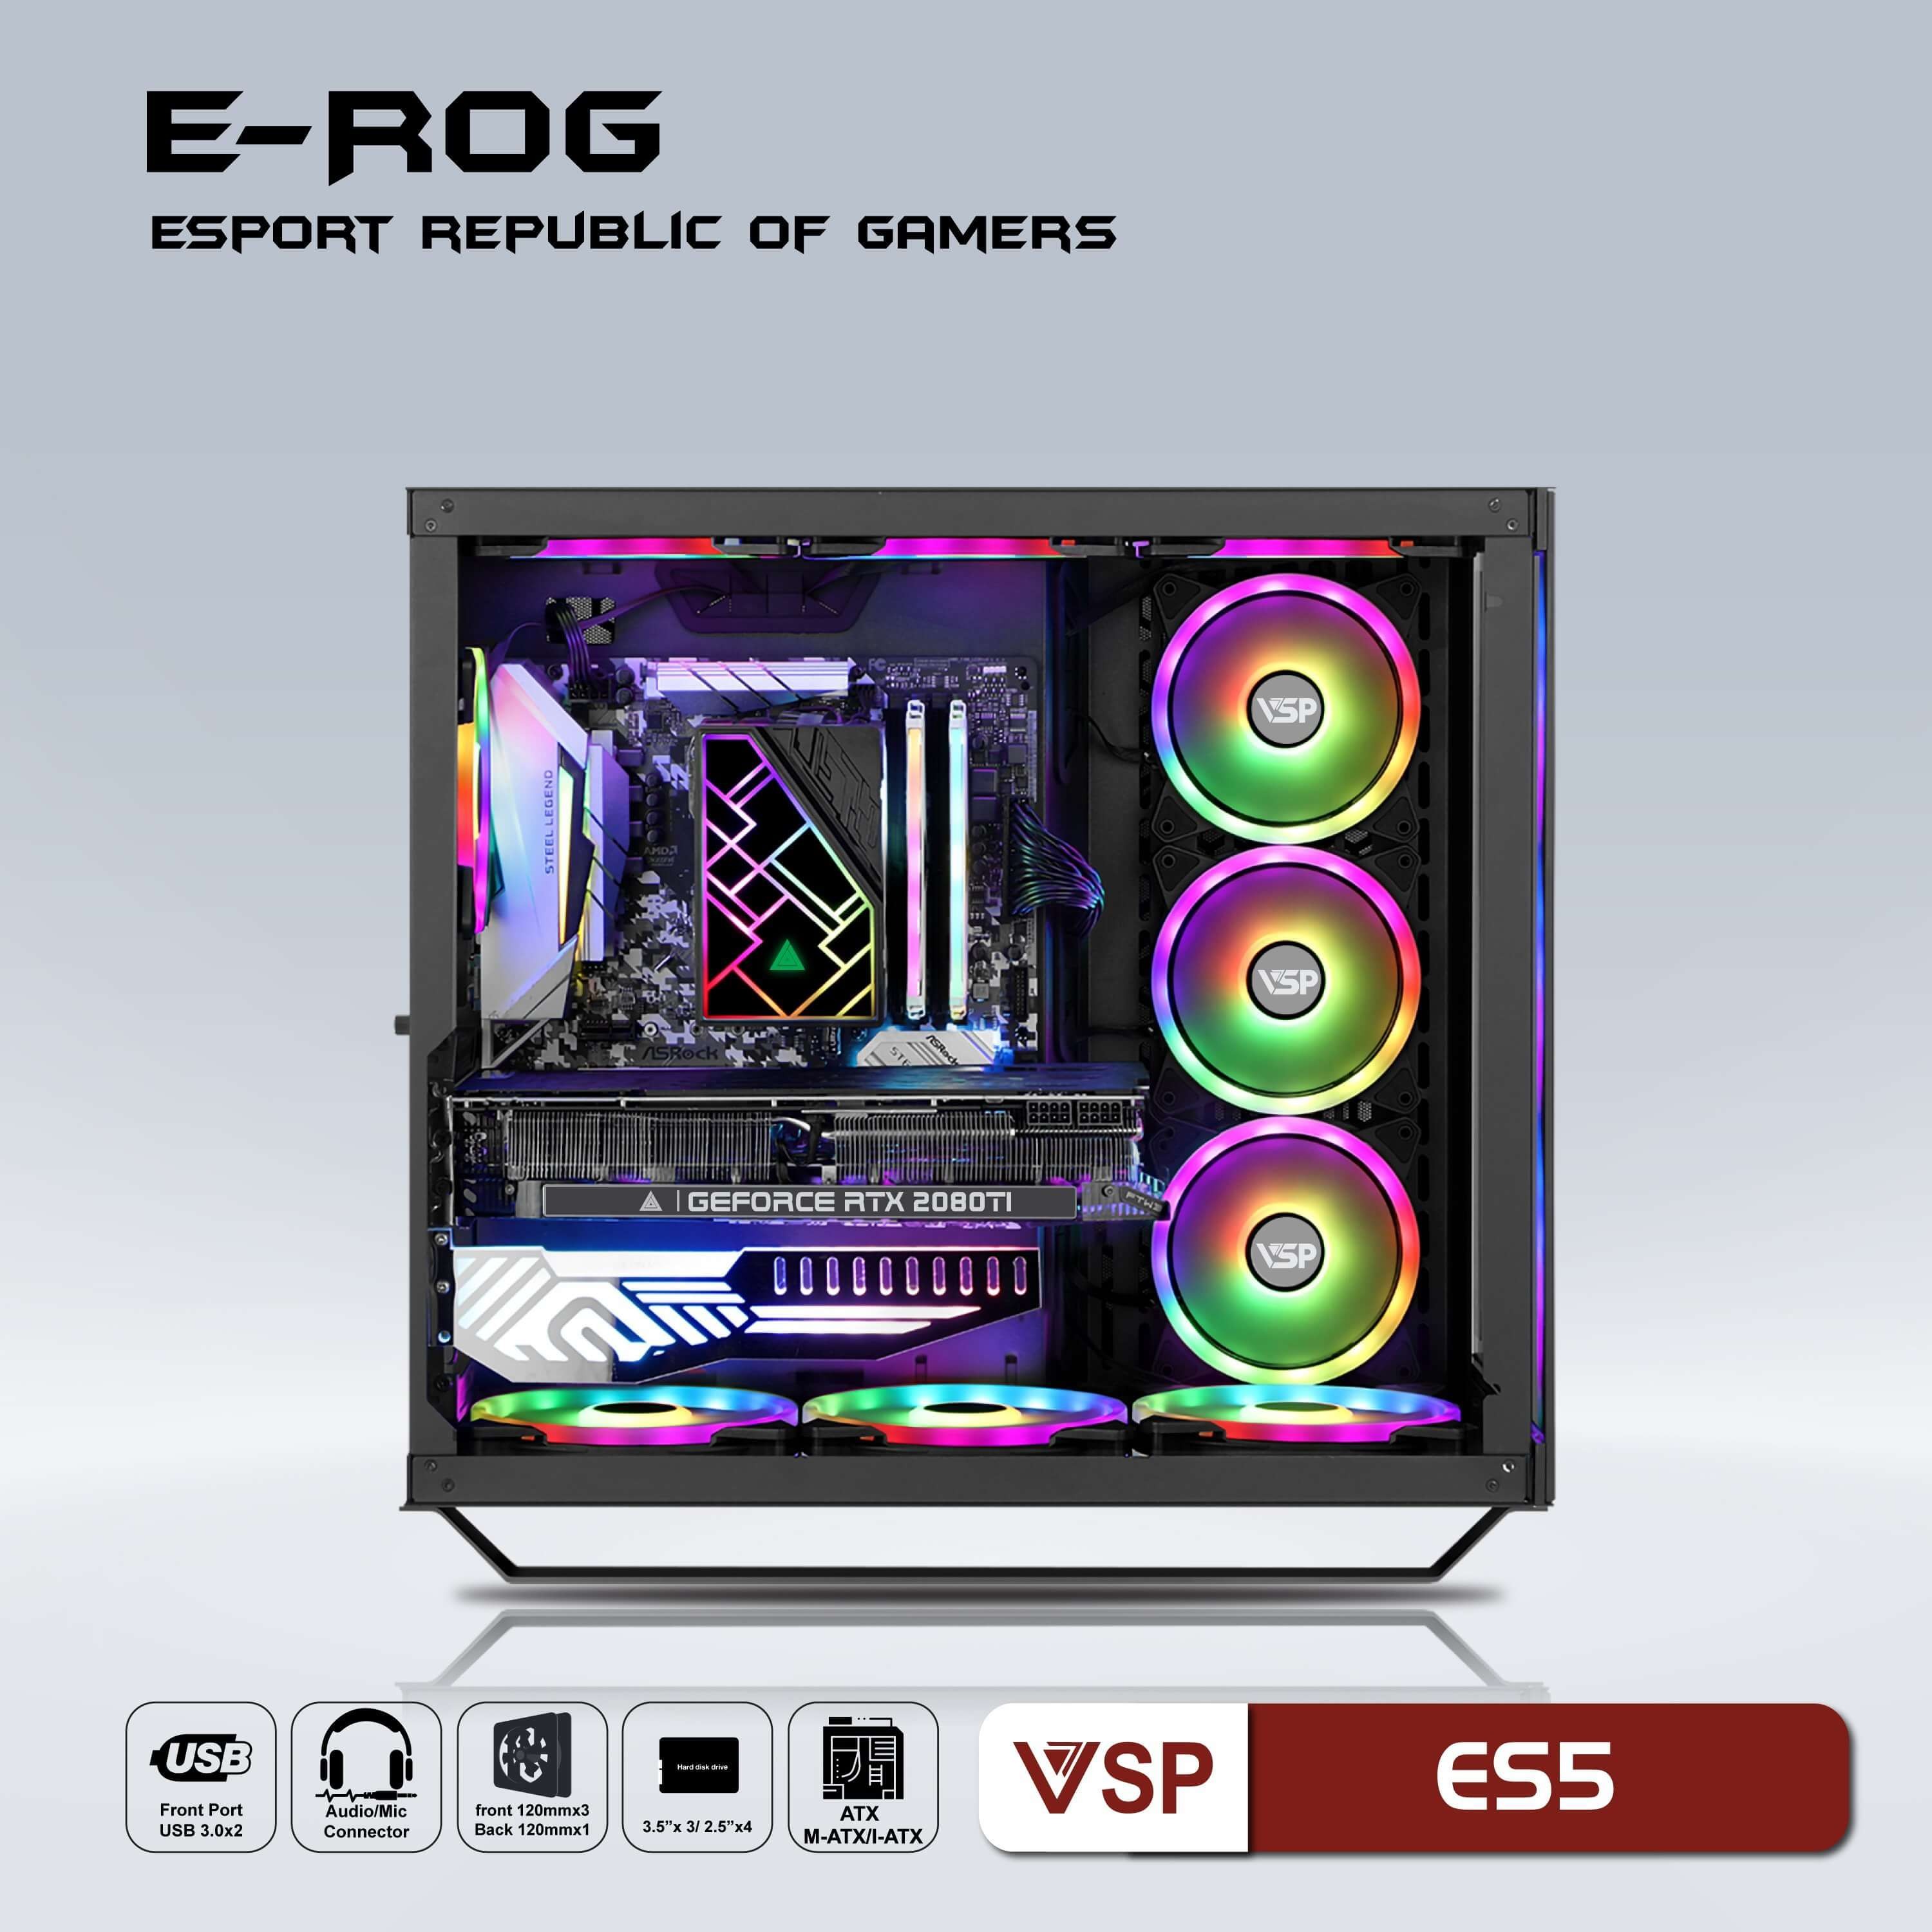 Case VSP E-ROG ES5 (Mid Tower/Màu Đen)